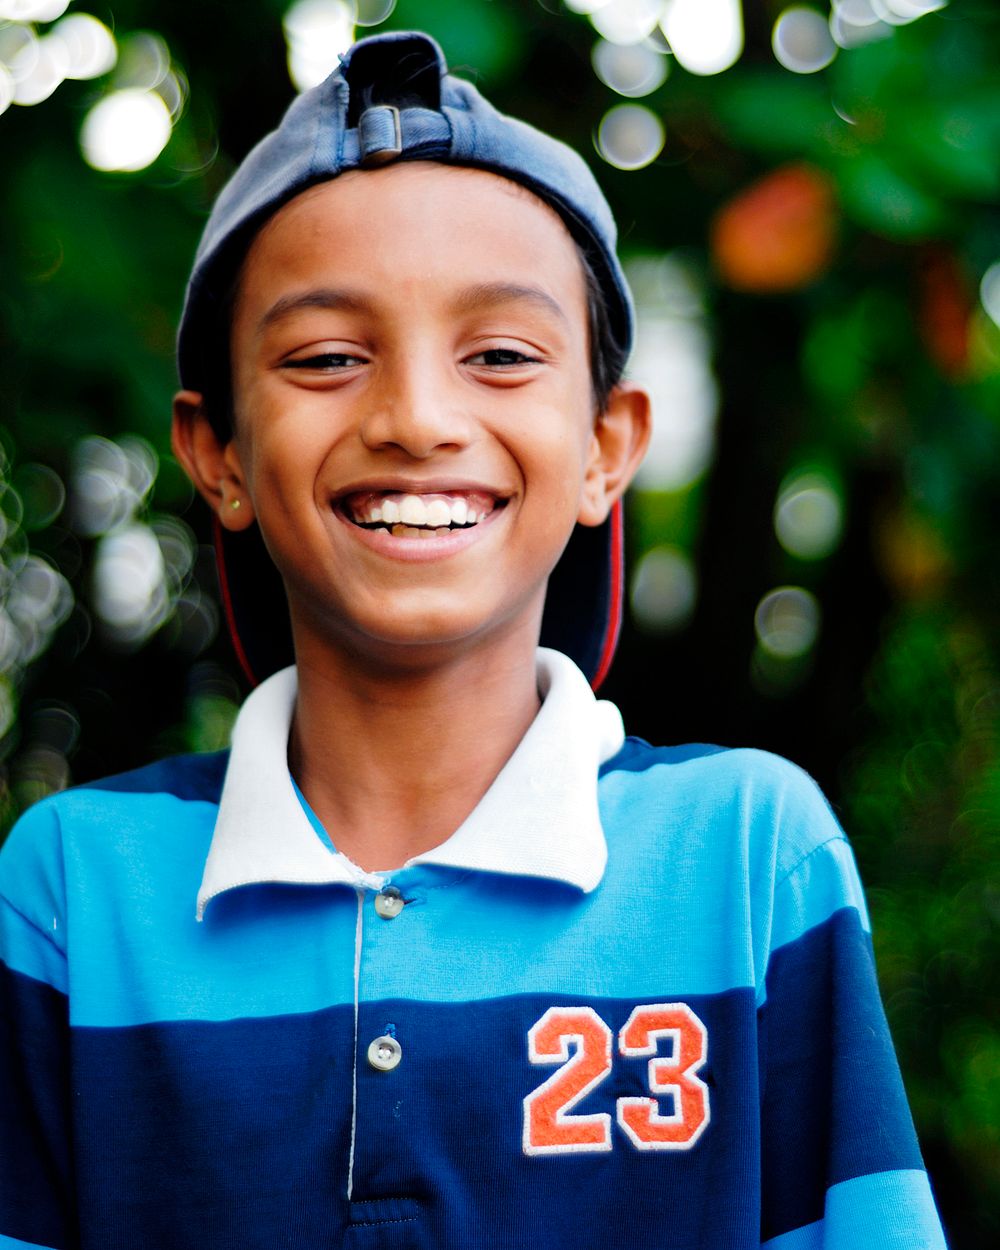 Portrait of smiling Malaysian boy